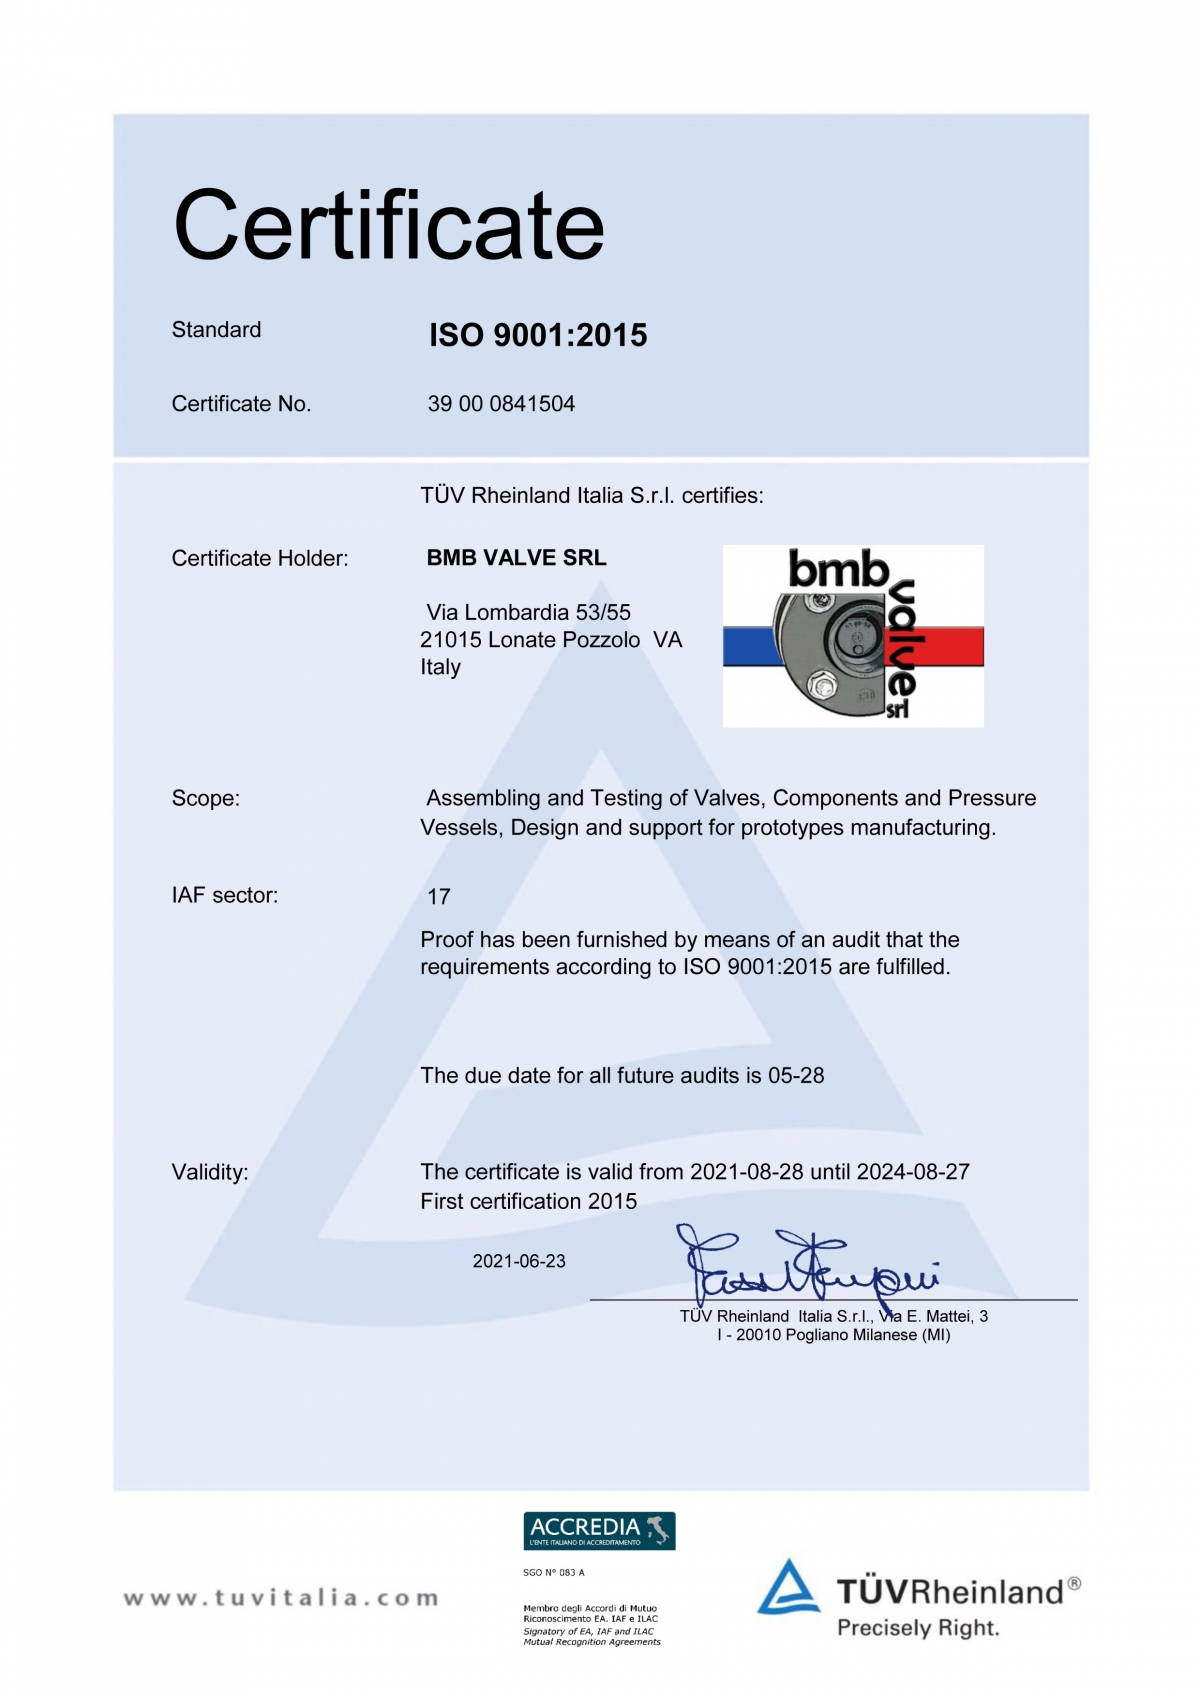 BMB Valve - The Company - ISO 9001 certification